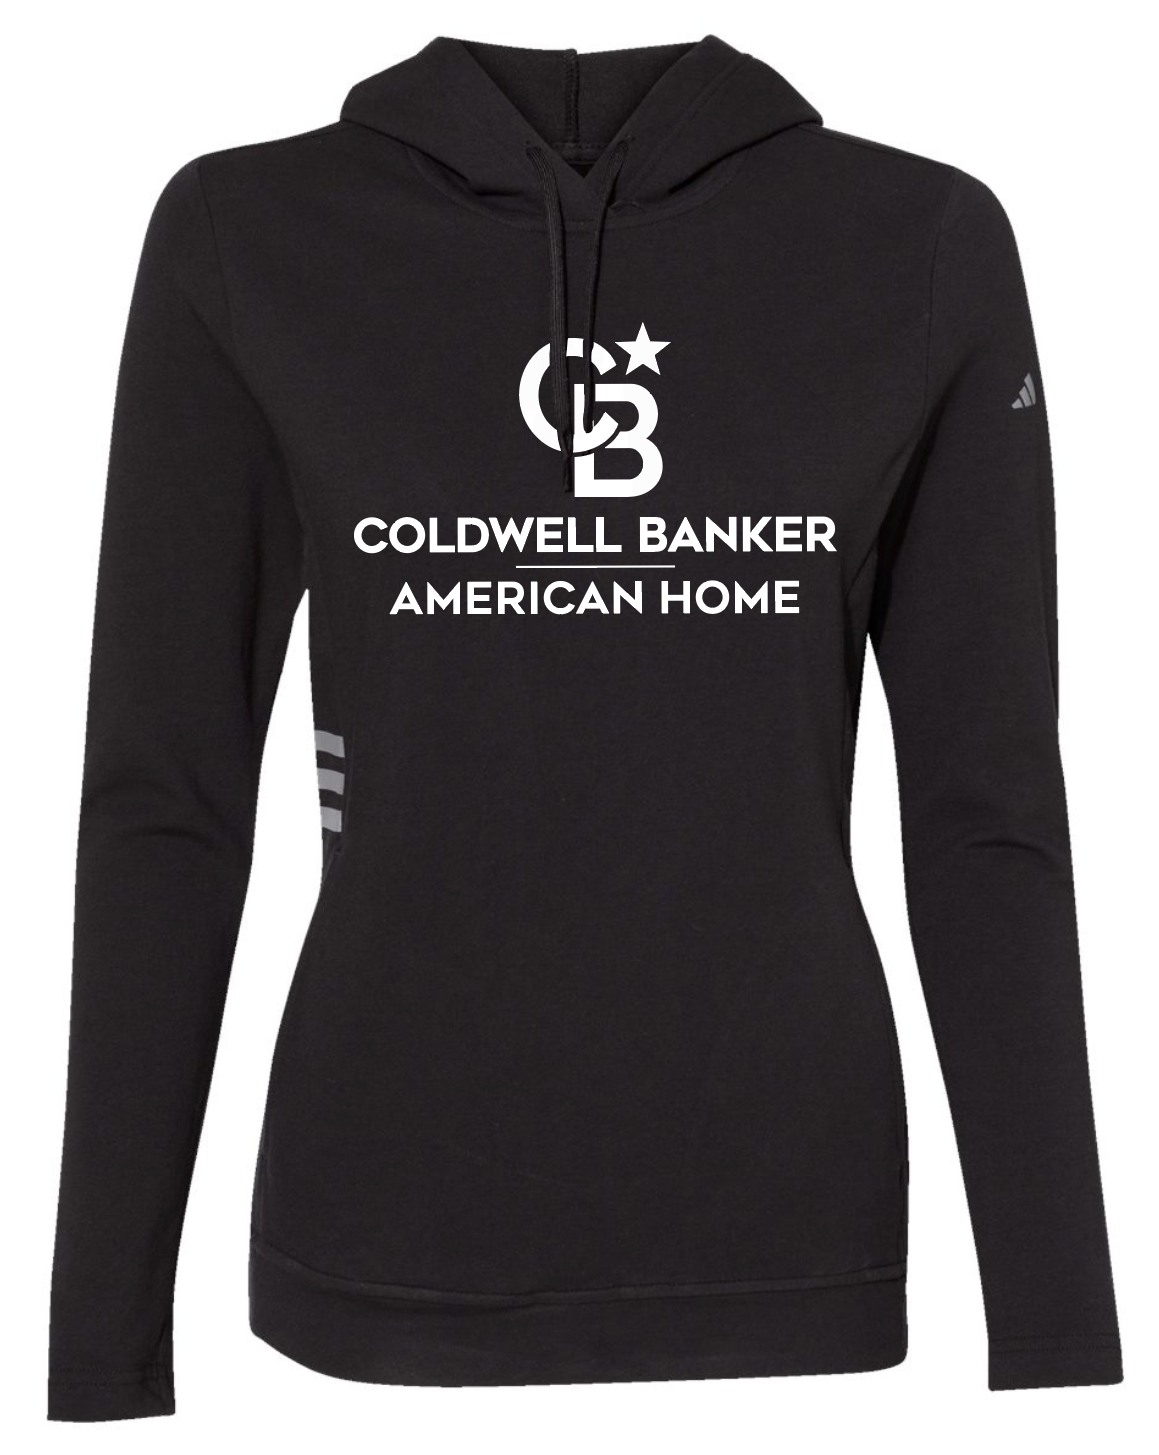 Coldwell Banker Adidas Womens Lightweight Hooded Sweatshirt